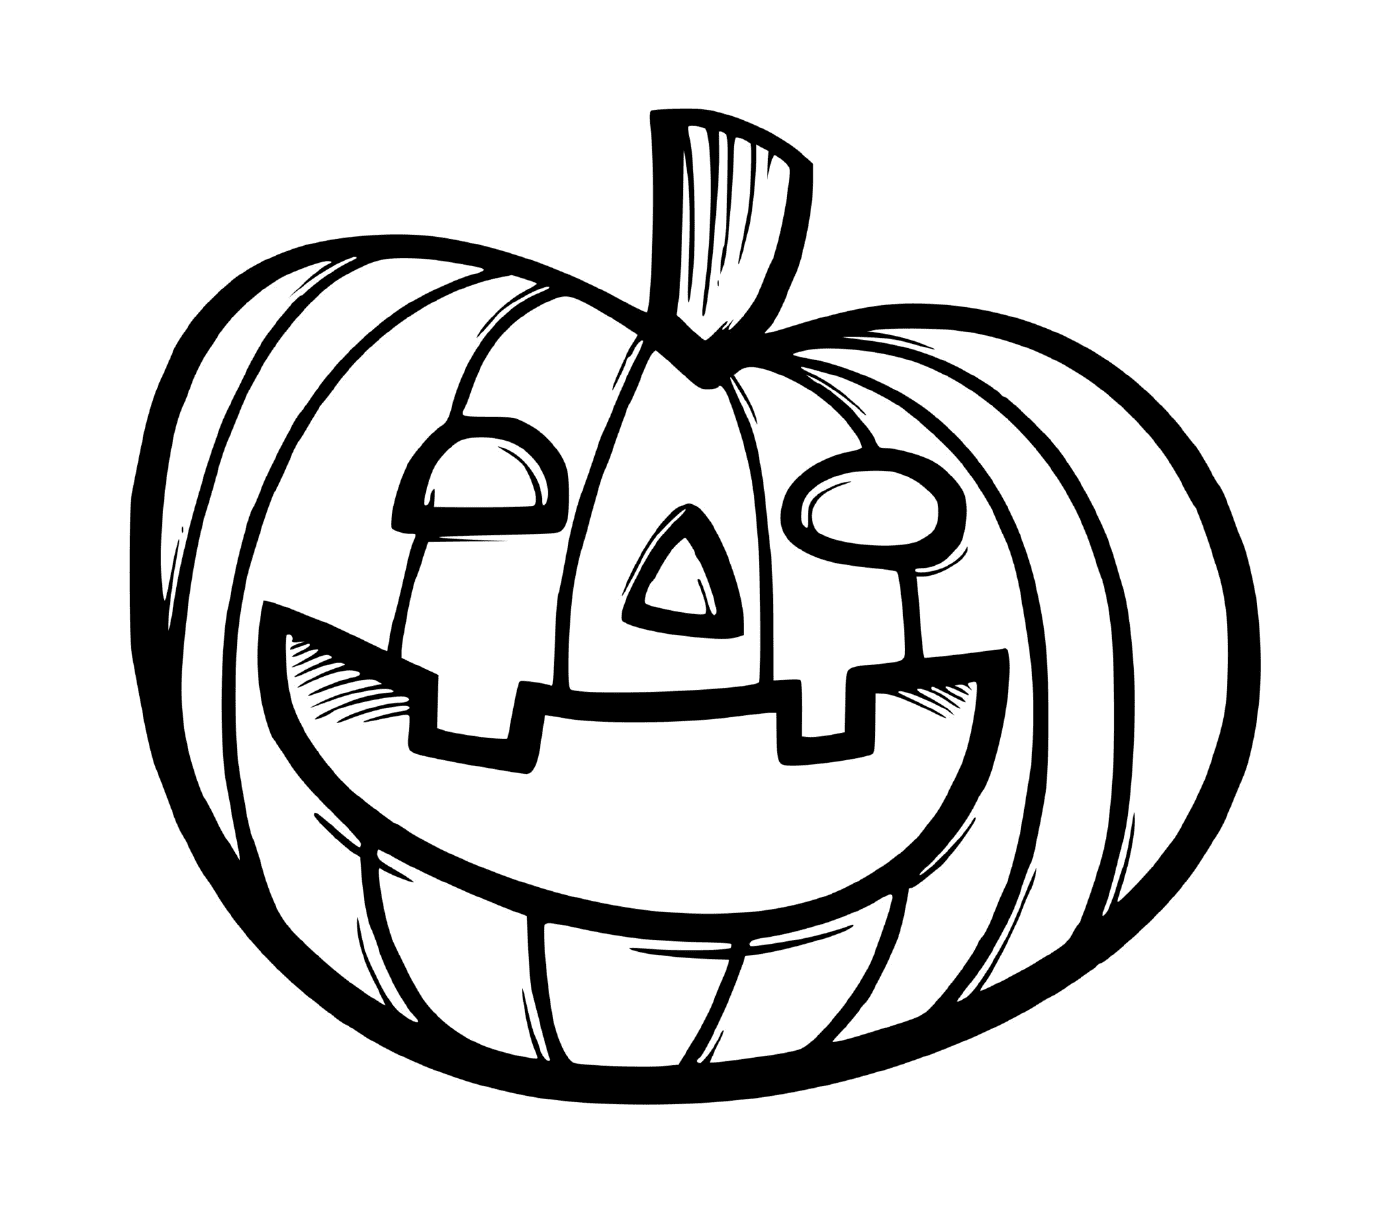  Carved pumpkin easily 